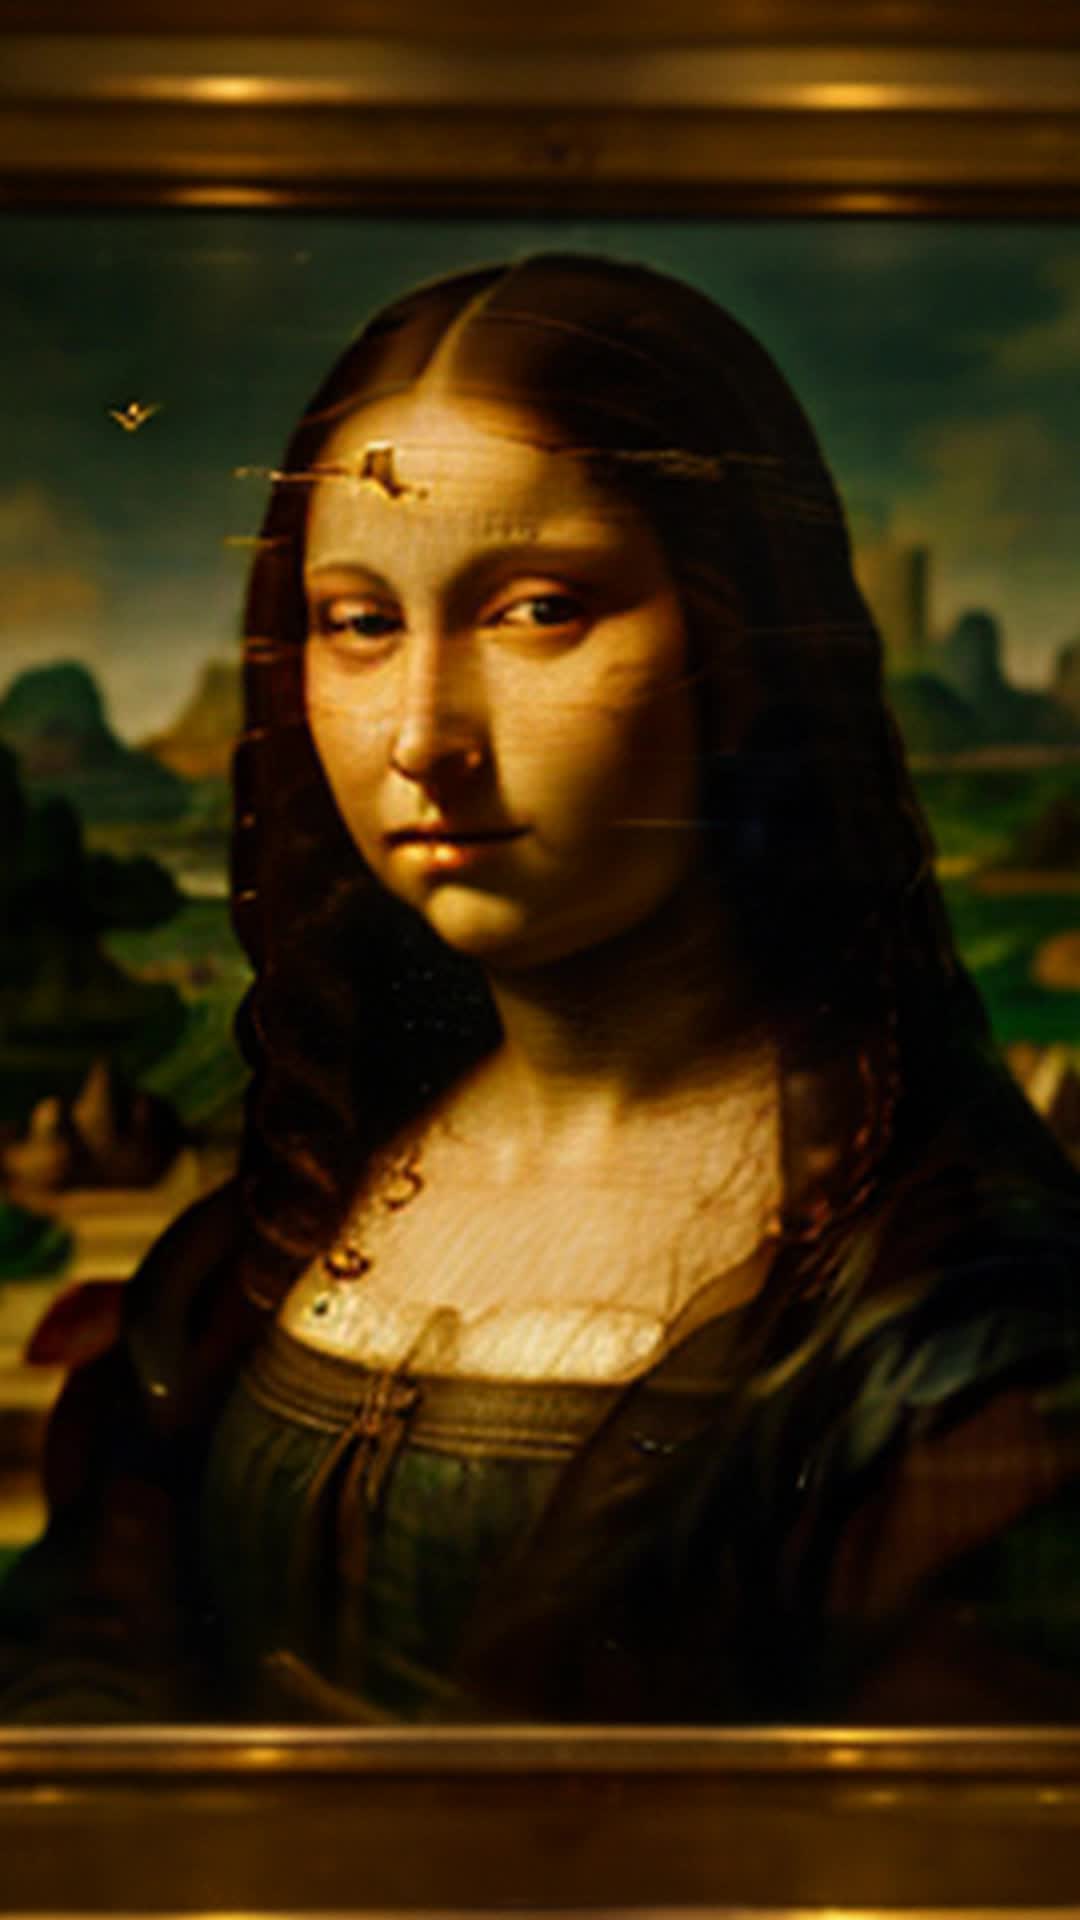 Final masterpiece reveal, 'The Bearded Mona Lisa', Leonardo da Vinci admiring, profound impact, Renaissance beauty standards transformed, vibrant palette, detailed frame, warm glowing light